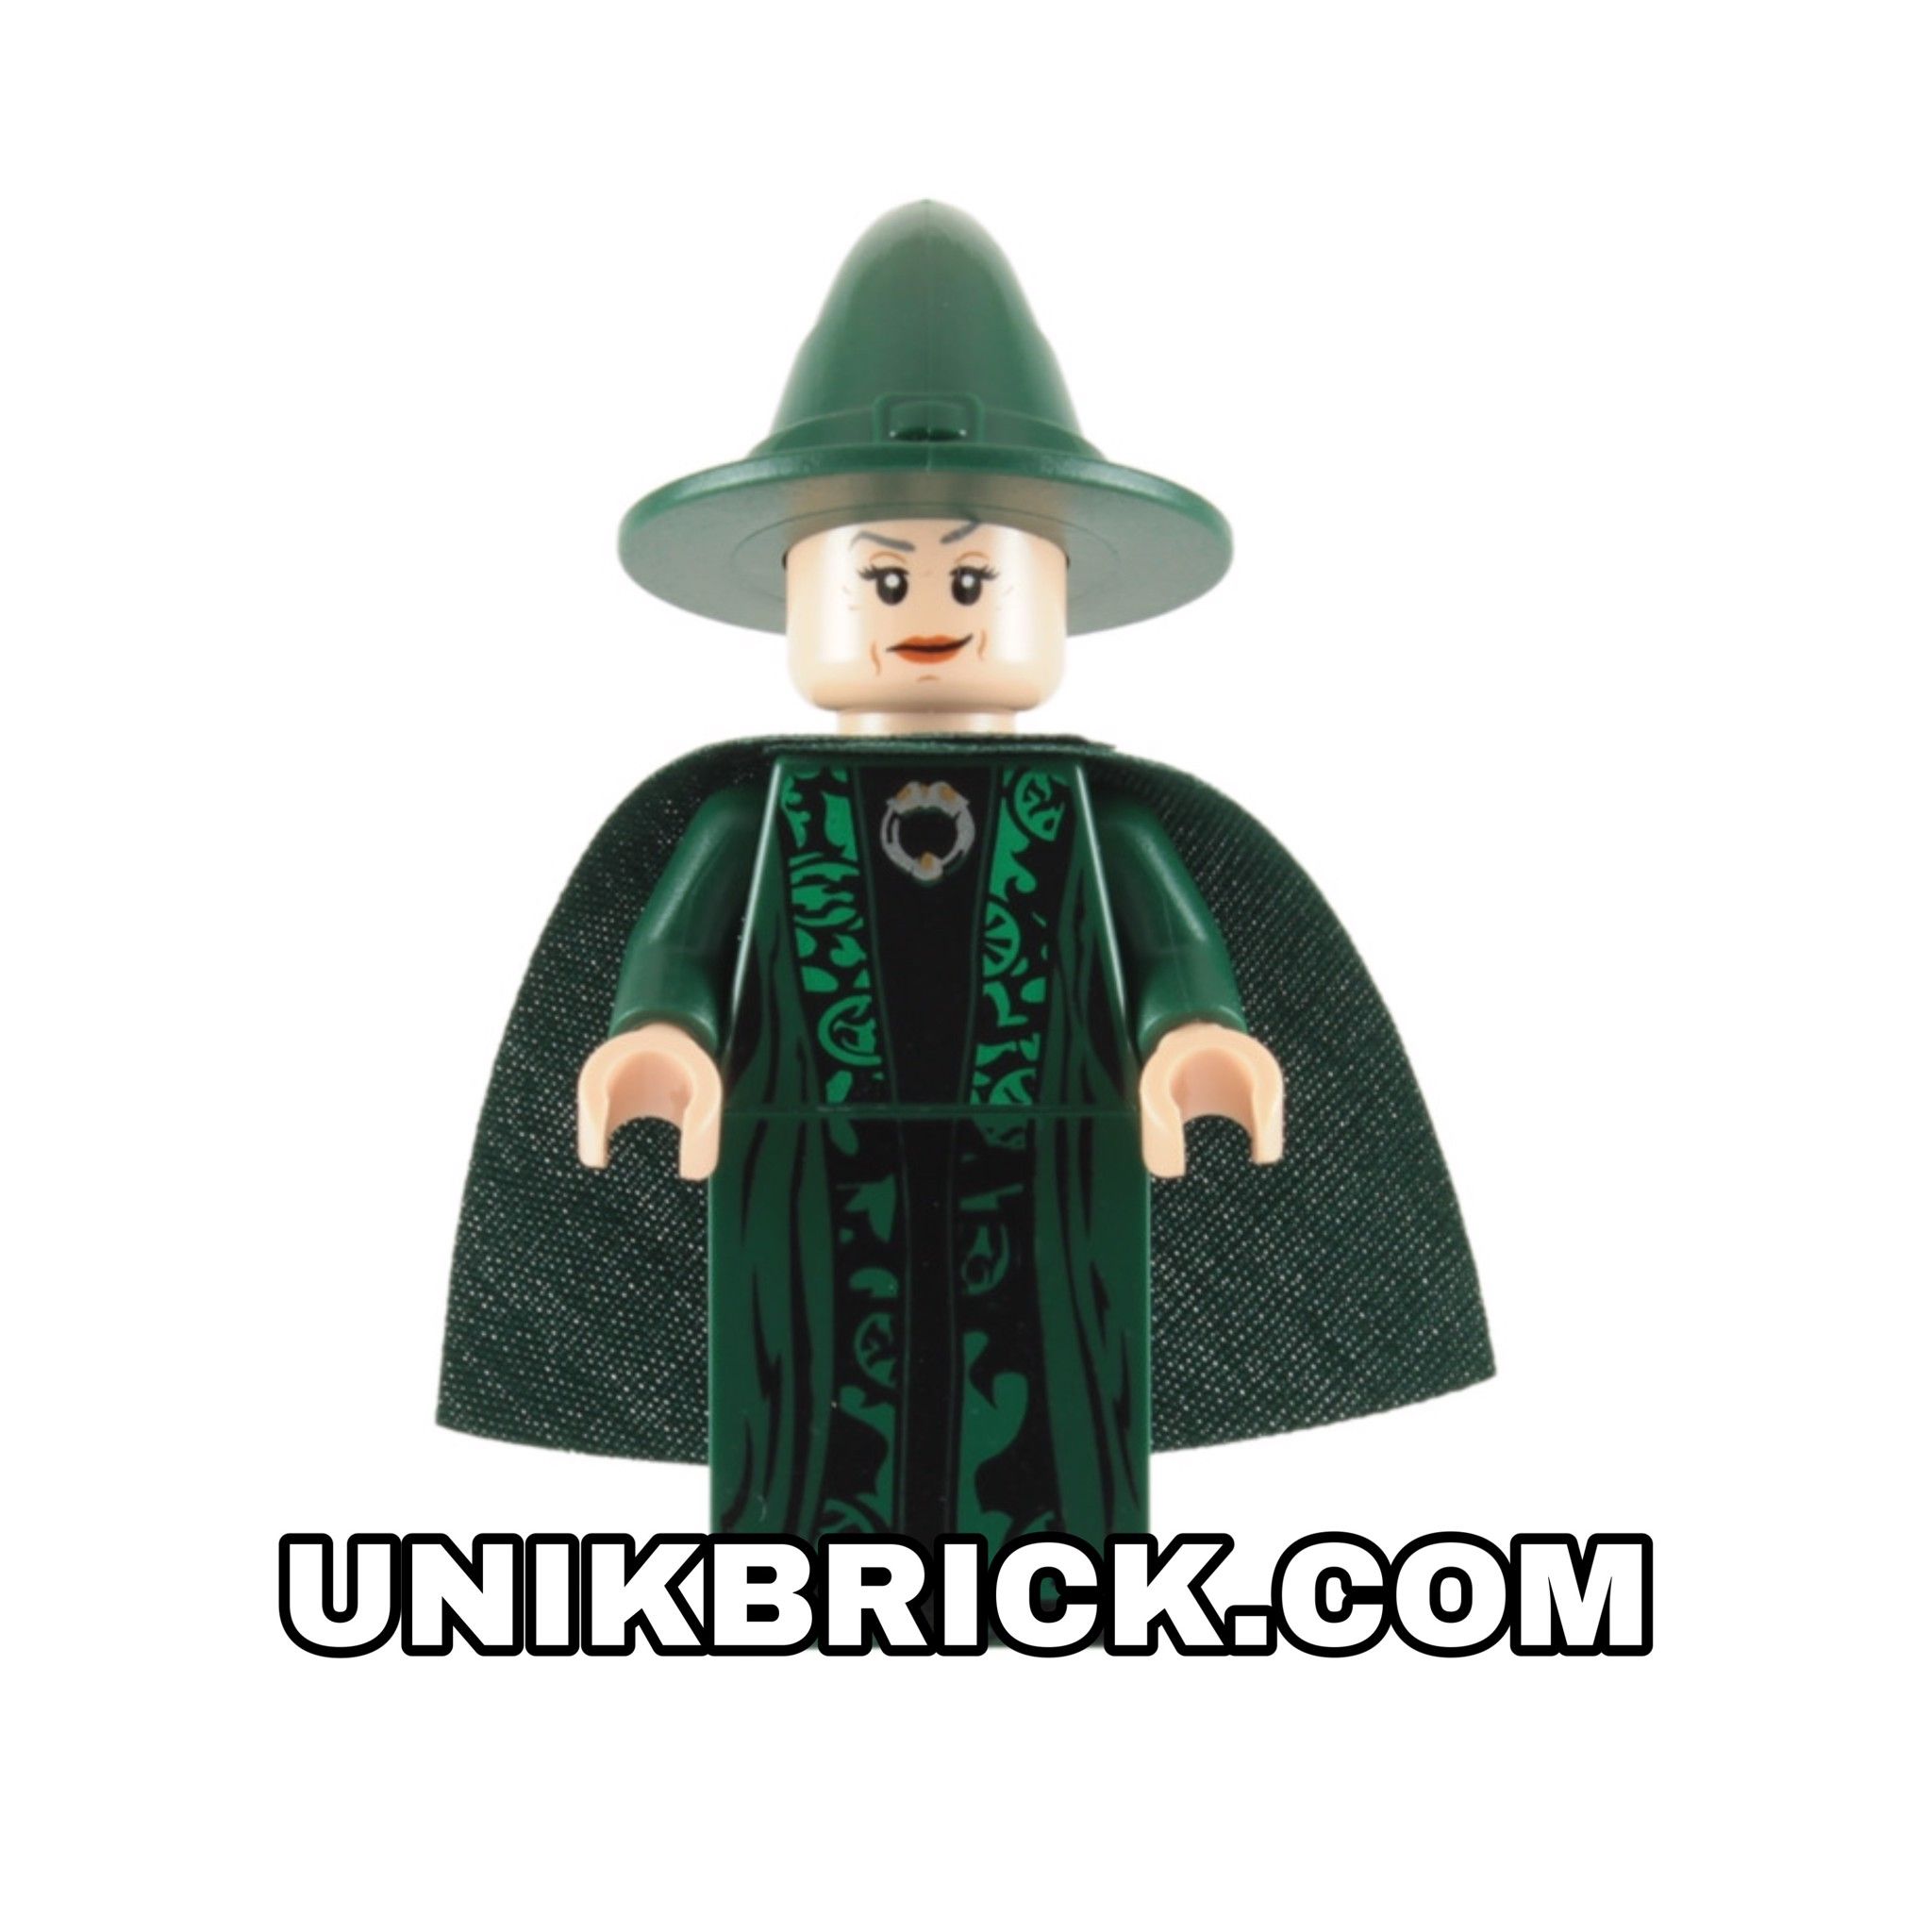 [ORDER ITEMS] LEGO Professor Minerva McGonagall Dark Green Robe and Cape